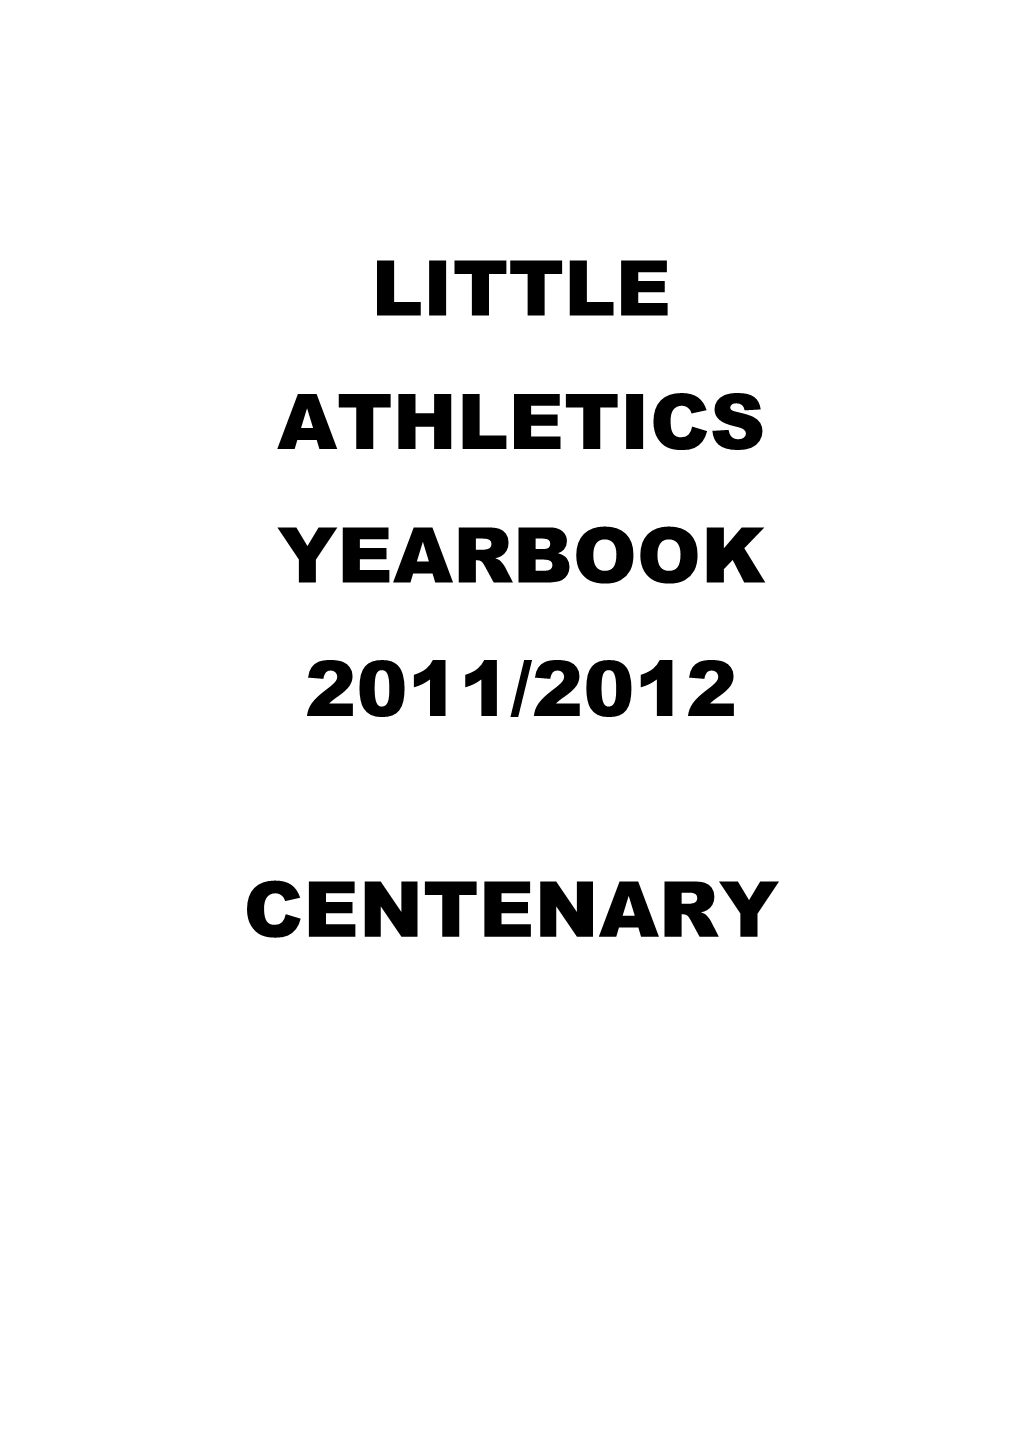 Little Athletics Yearbook 2011/2012